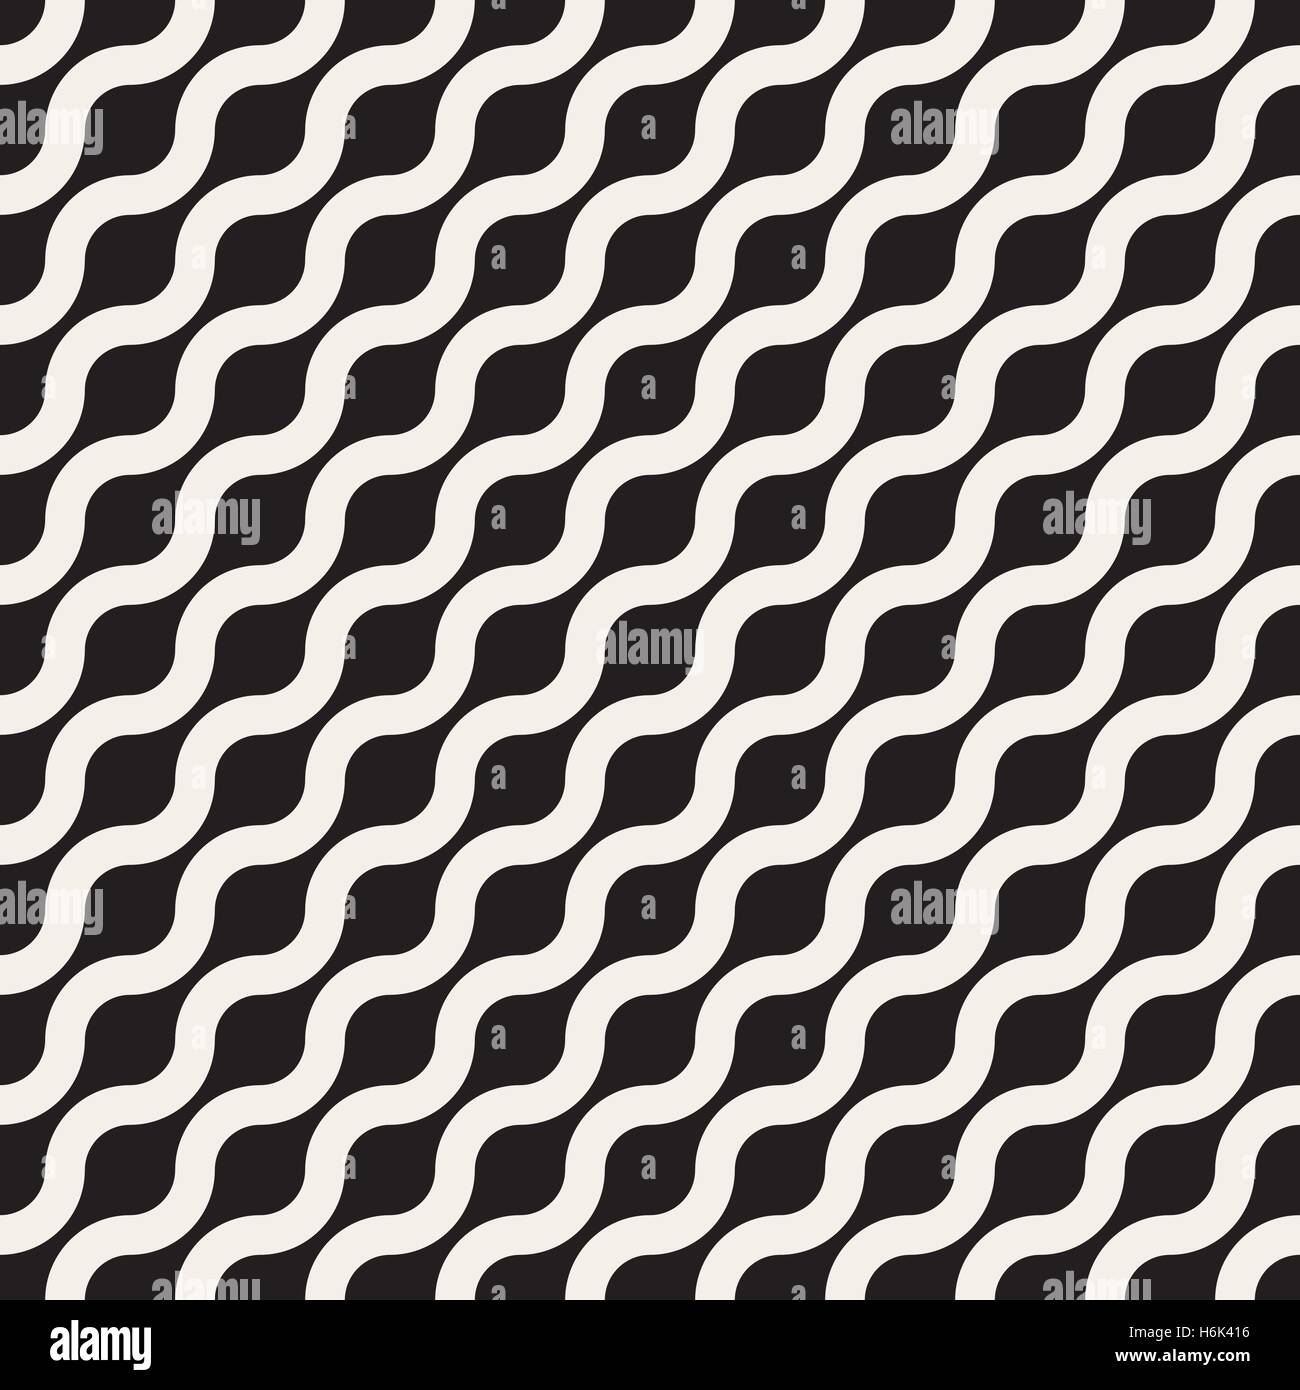 Wavy line seamless pattern. Geometric fabric print texture